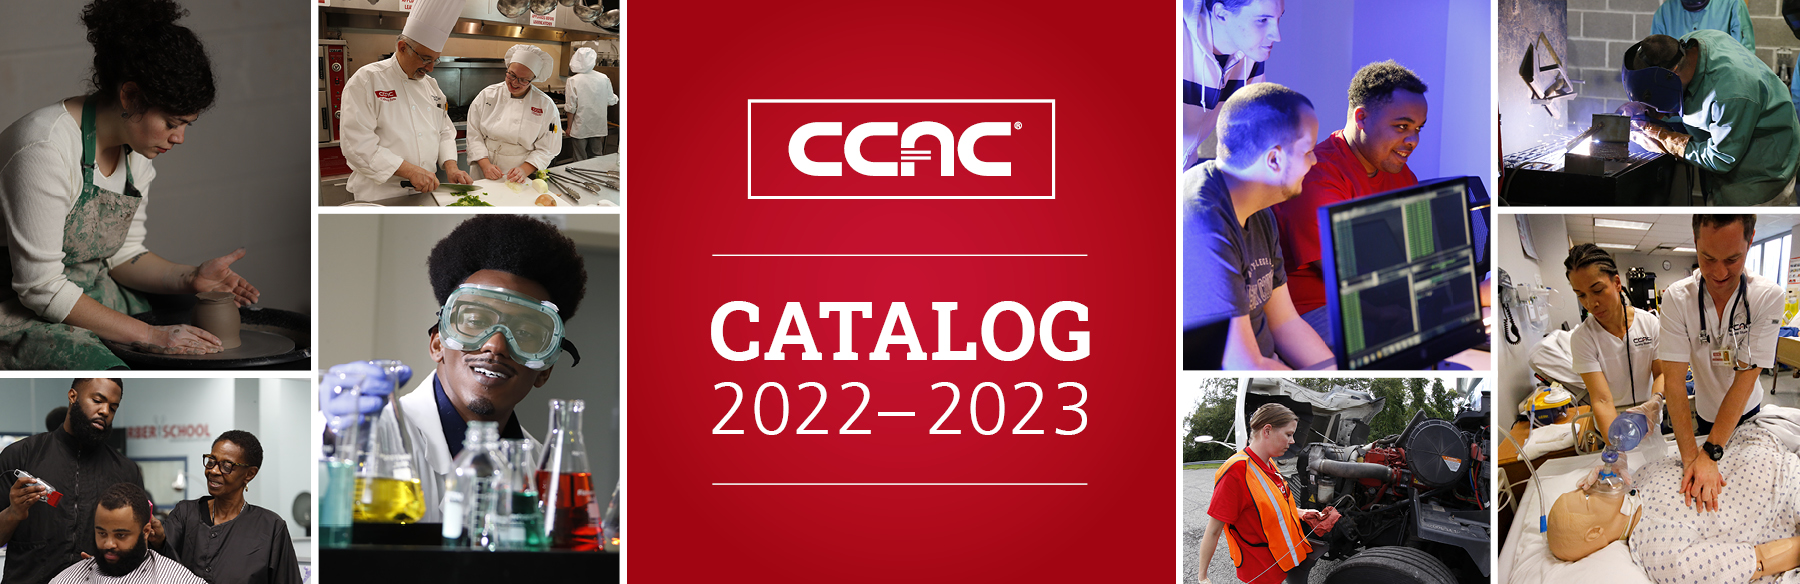 CCAC Catalog